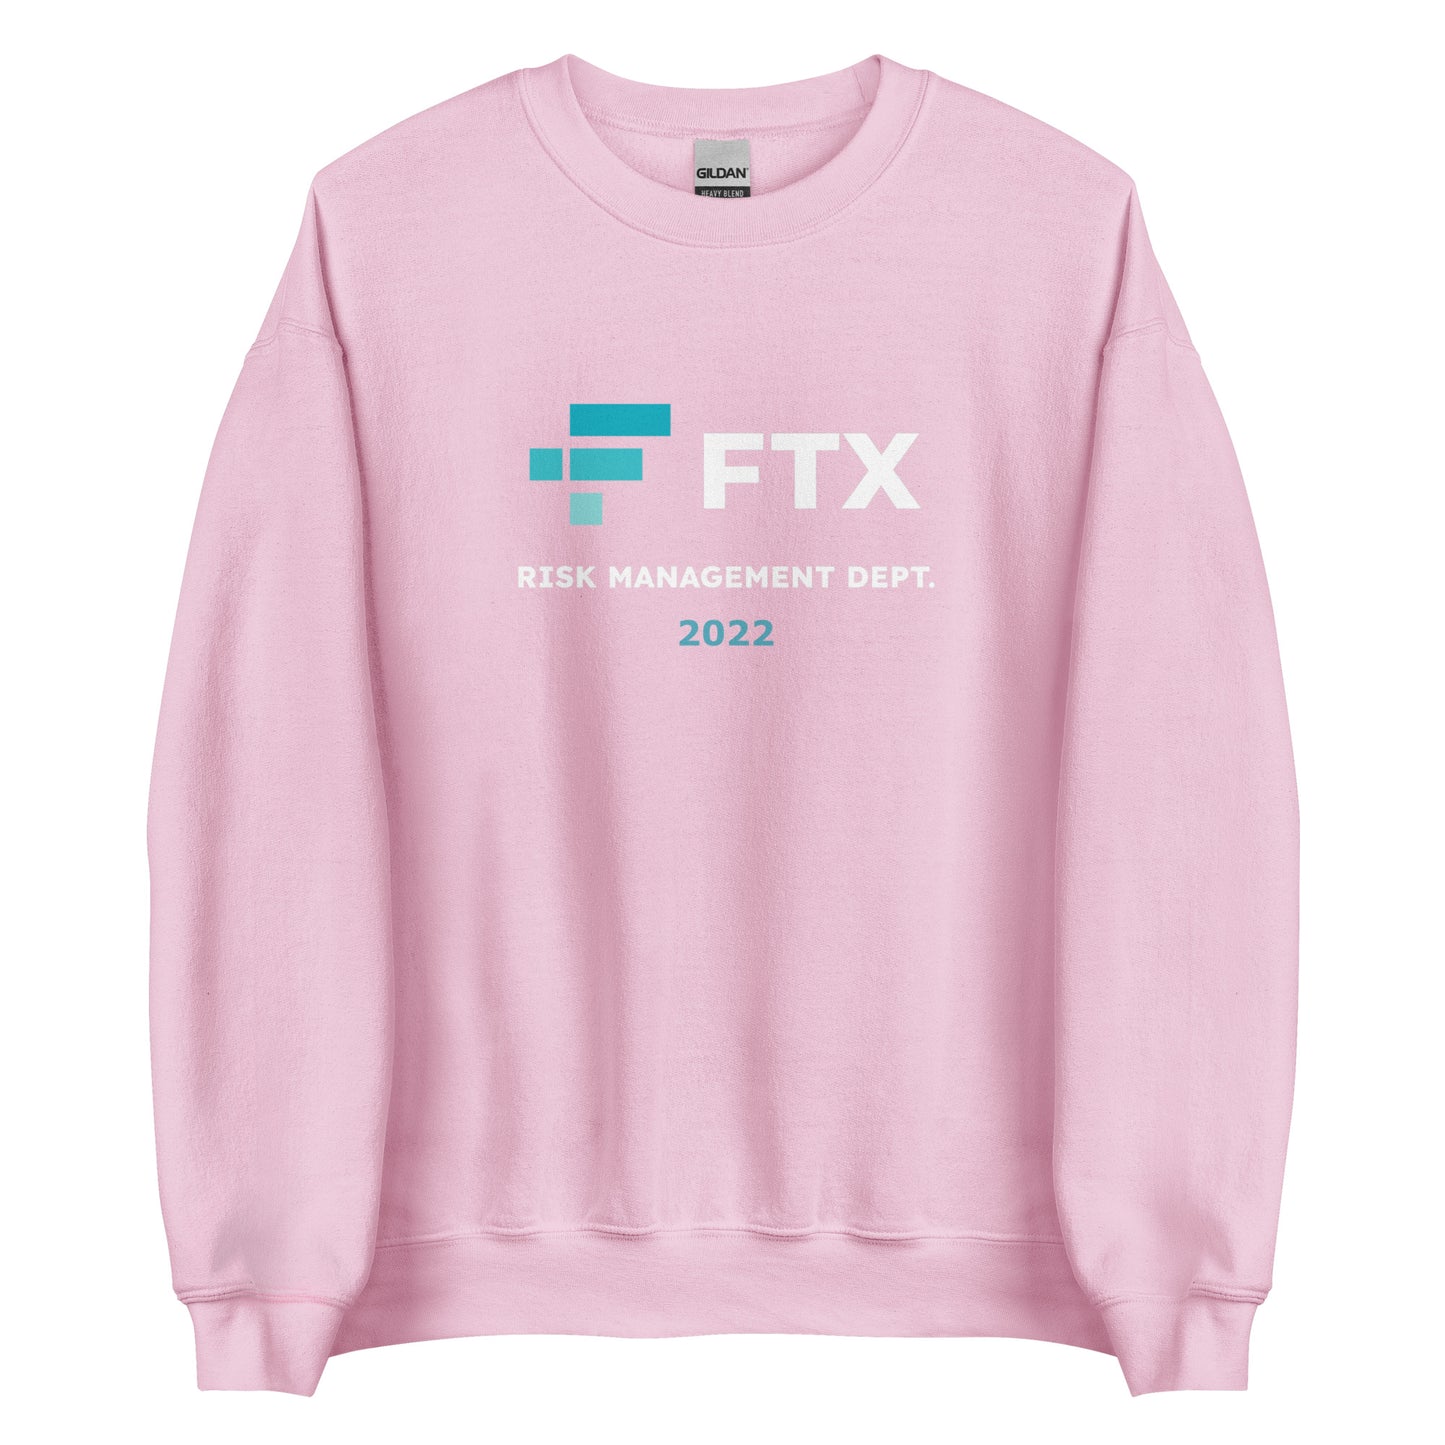 FTX Risk management Dept. Unisex Sweatshirt